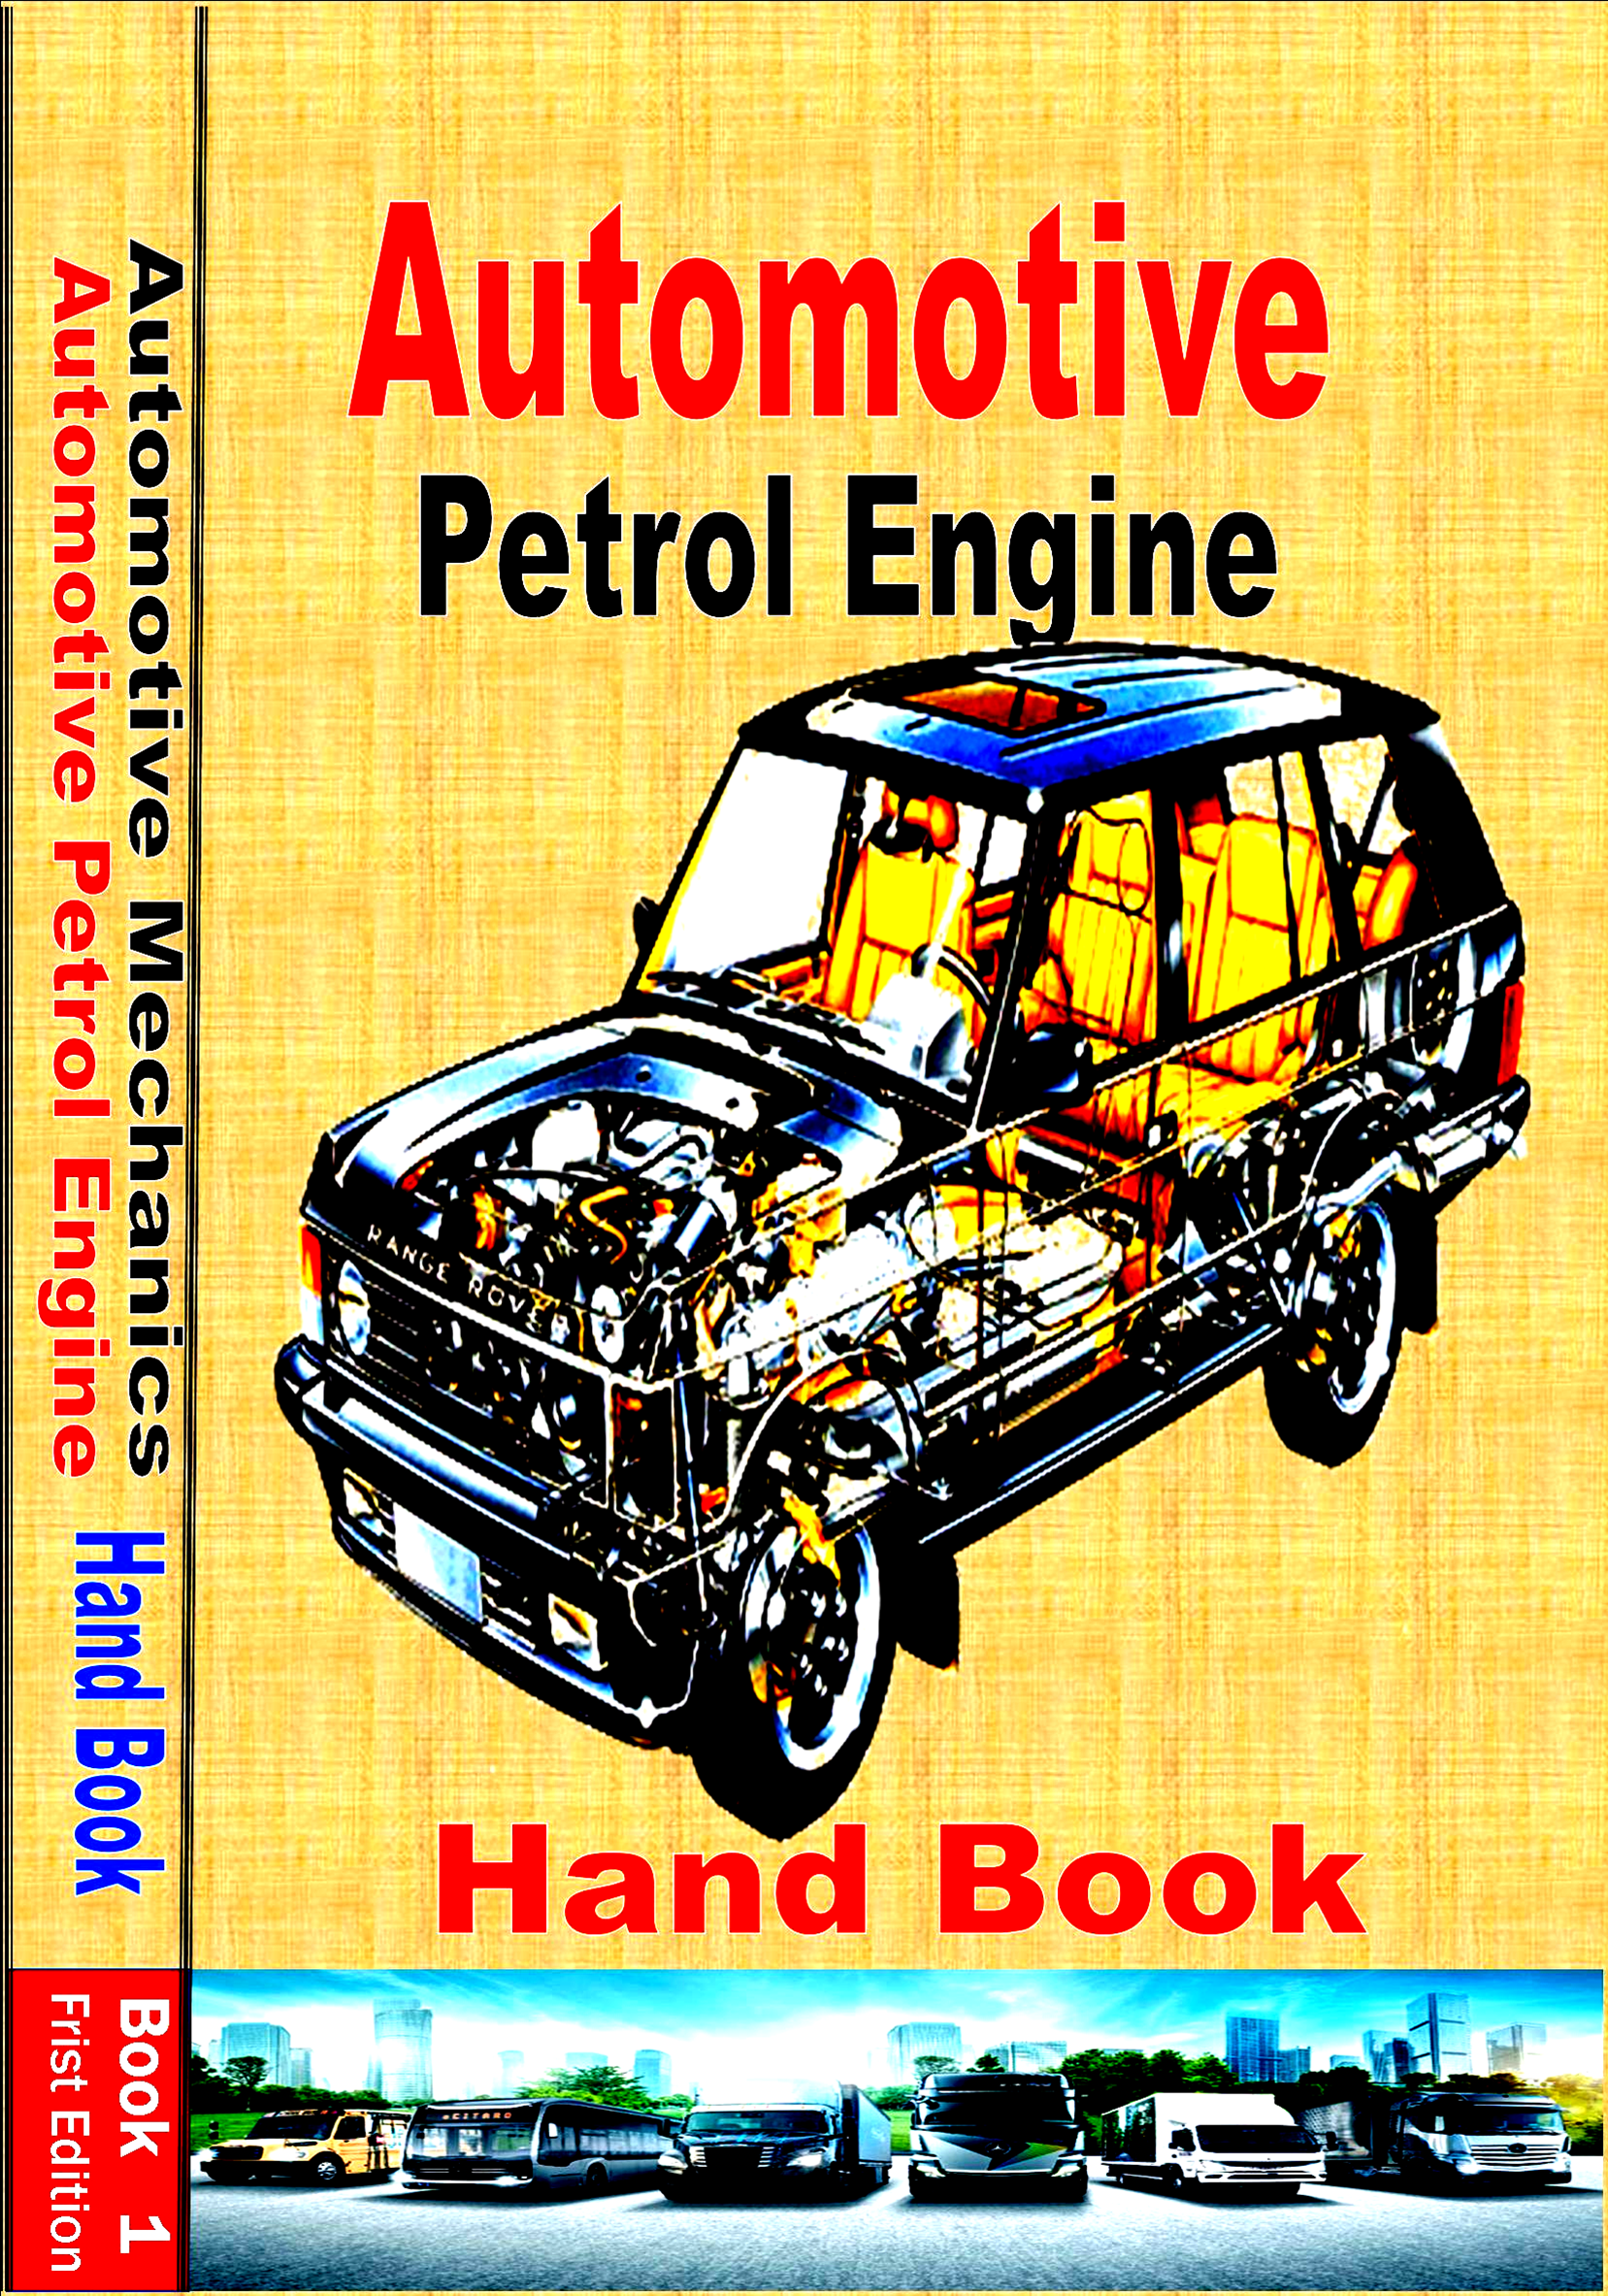 Automotive Petrol Engine Hand book